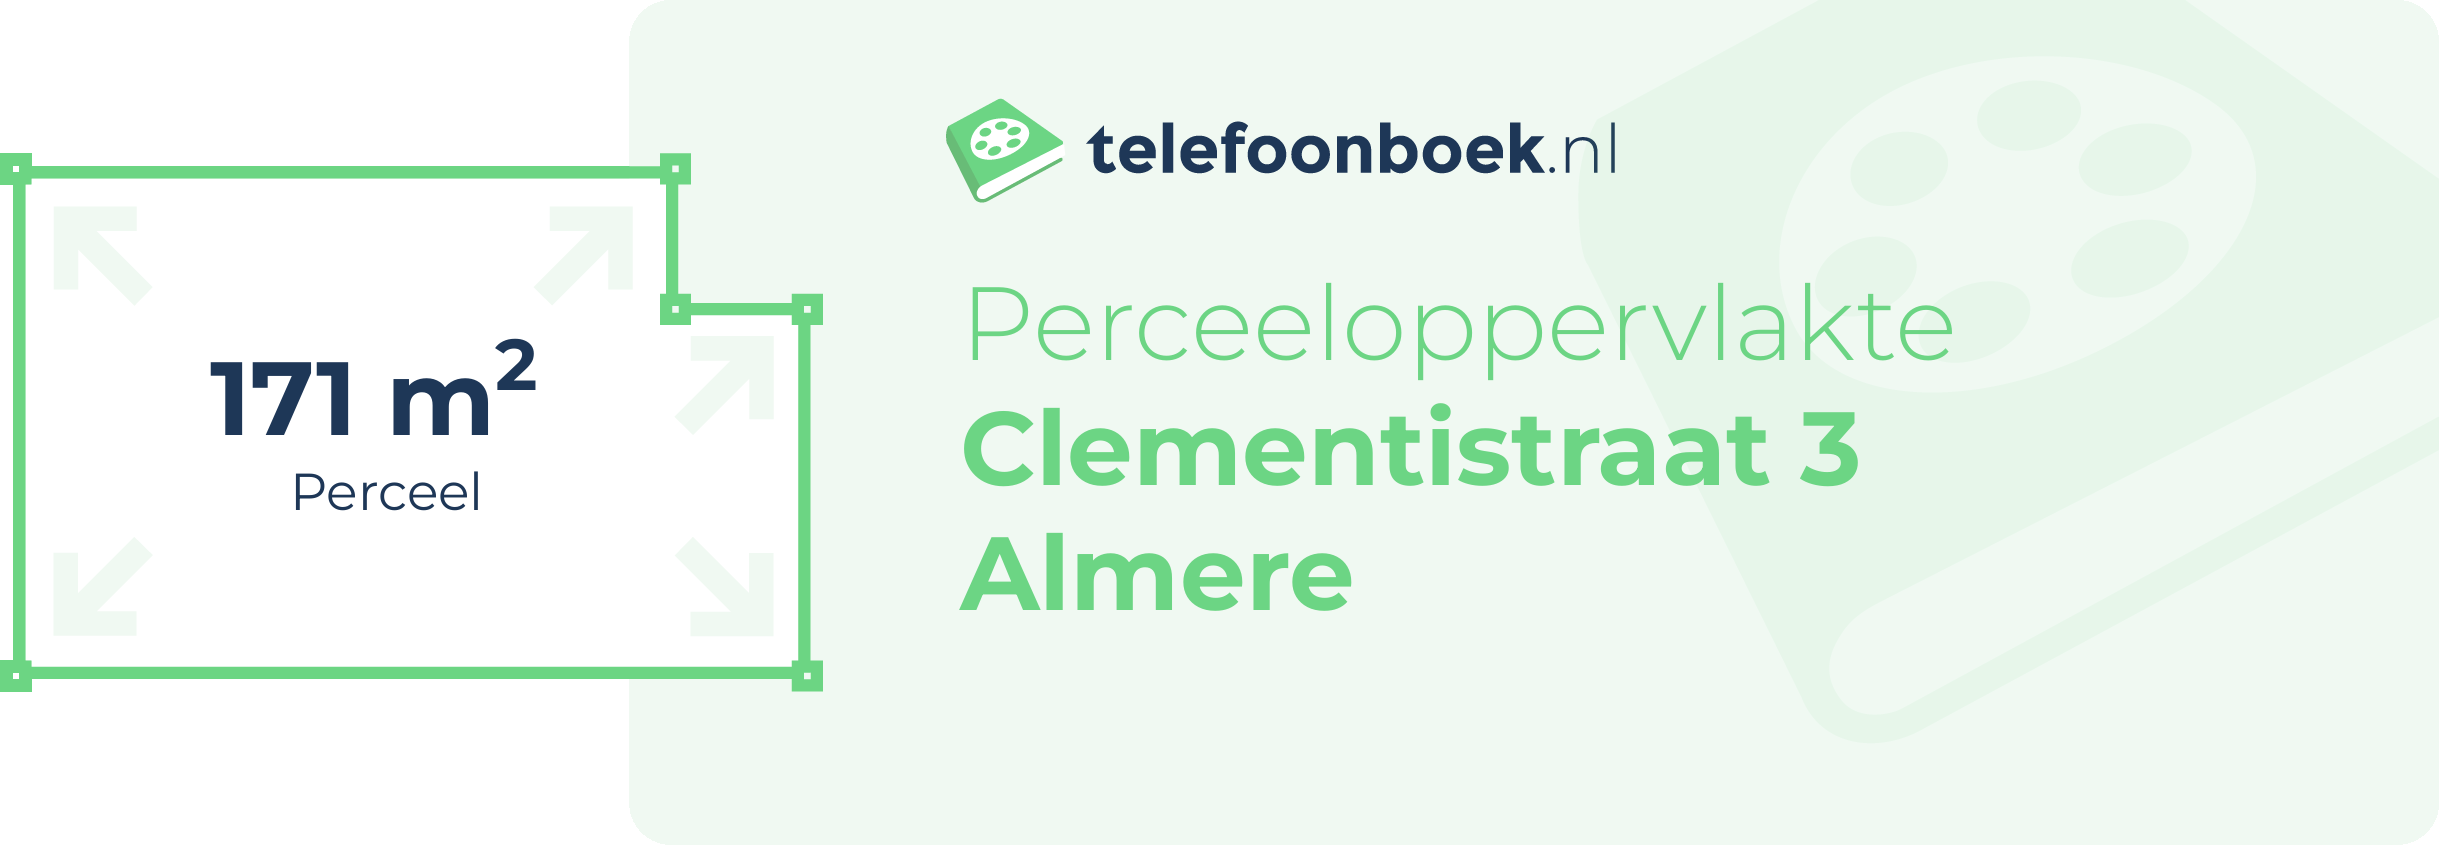 Perceeloppervlakte Clementistraat 3 Almere